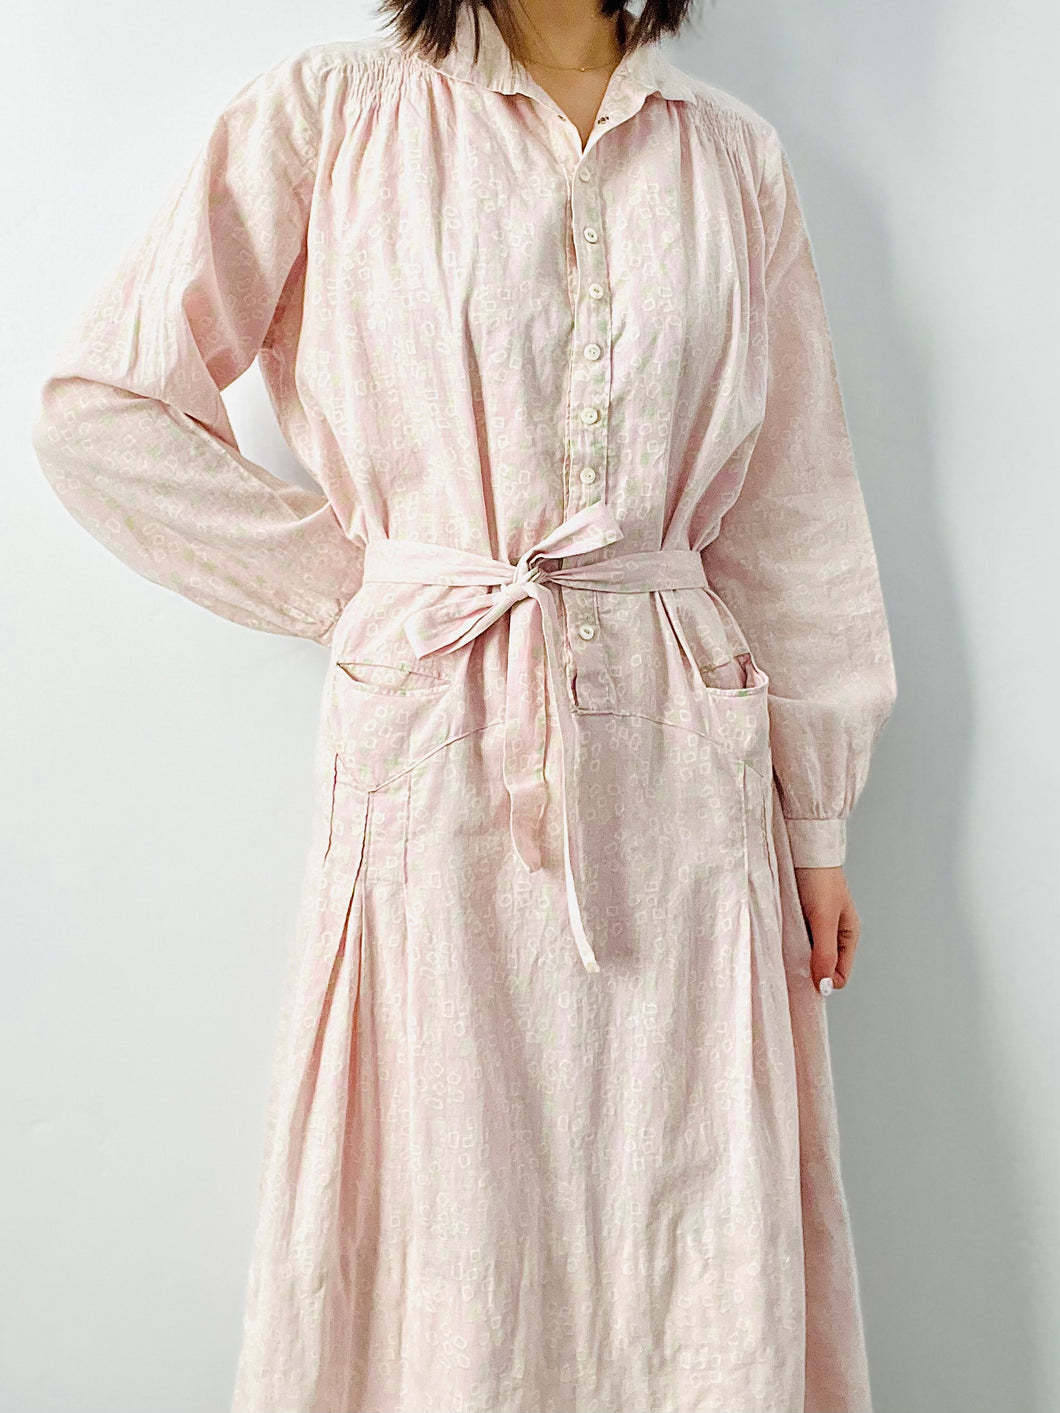 Vintage 1920s pastel pink cotton dress